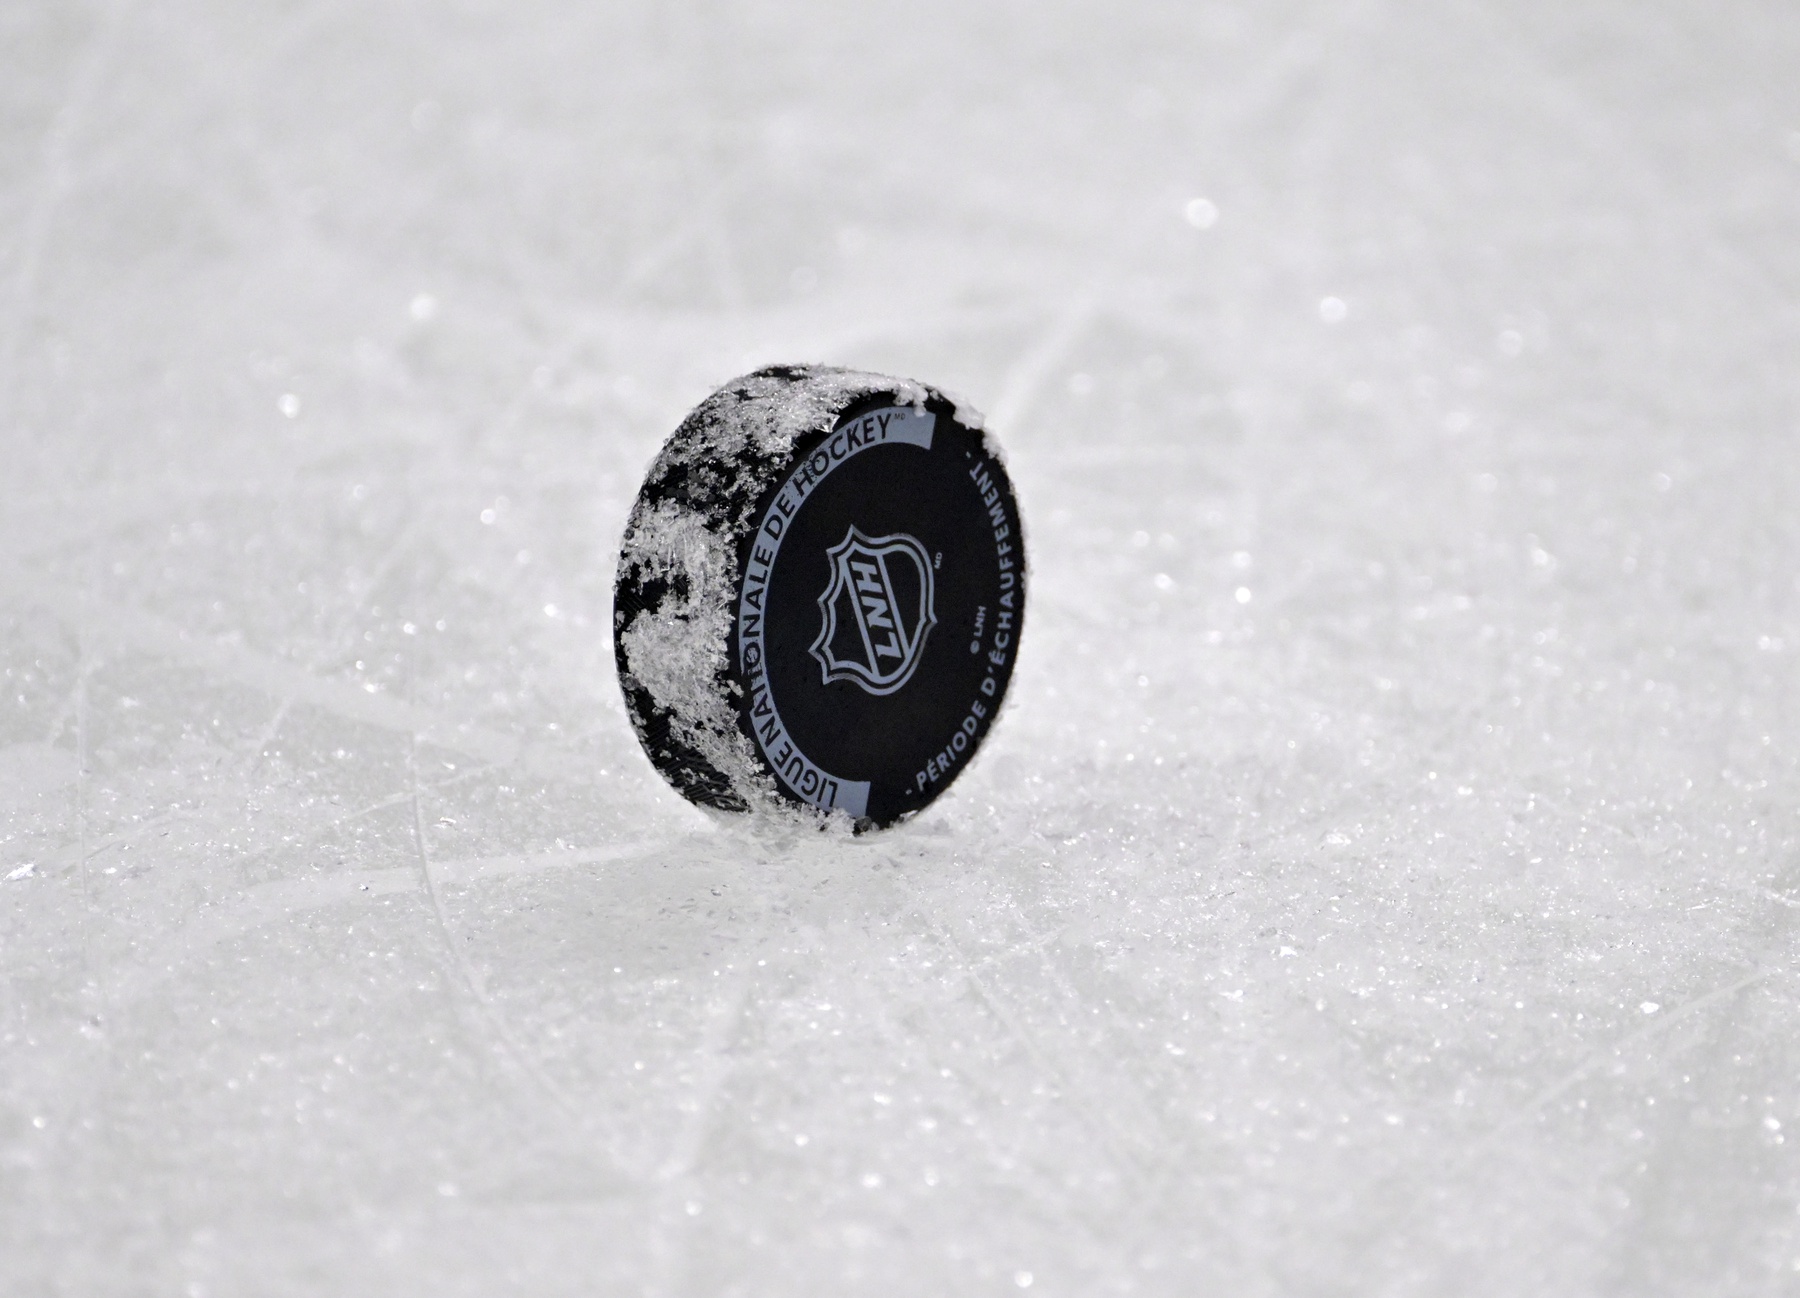 NHL logo on puck